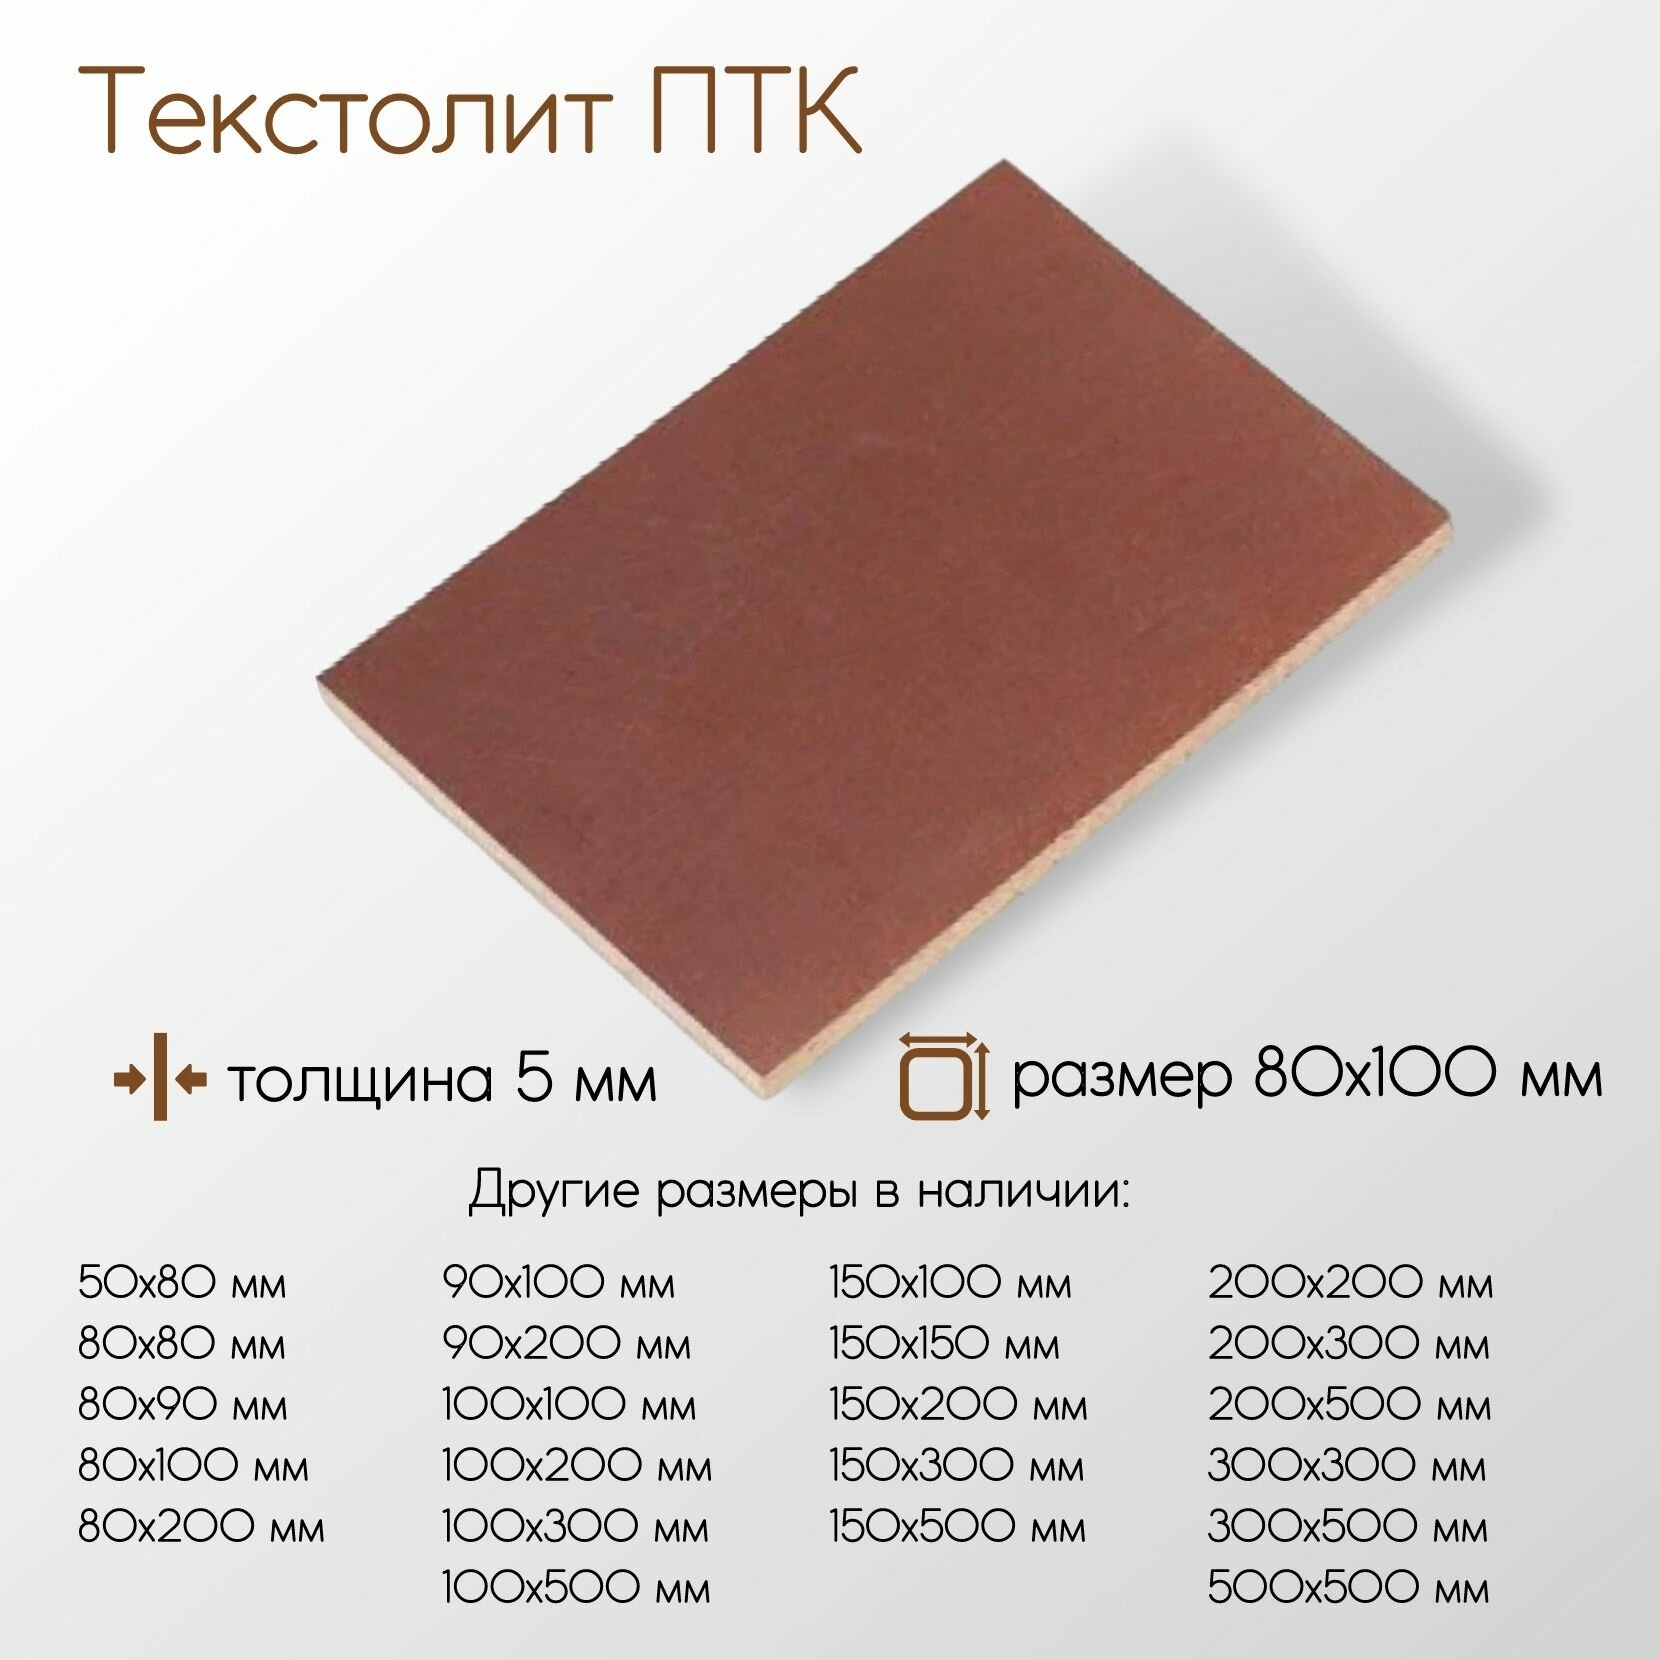 Текстолит ПТК лист толщина 5 мм 5x80x100 мм